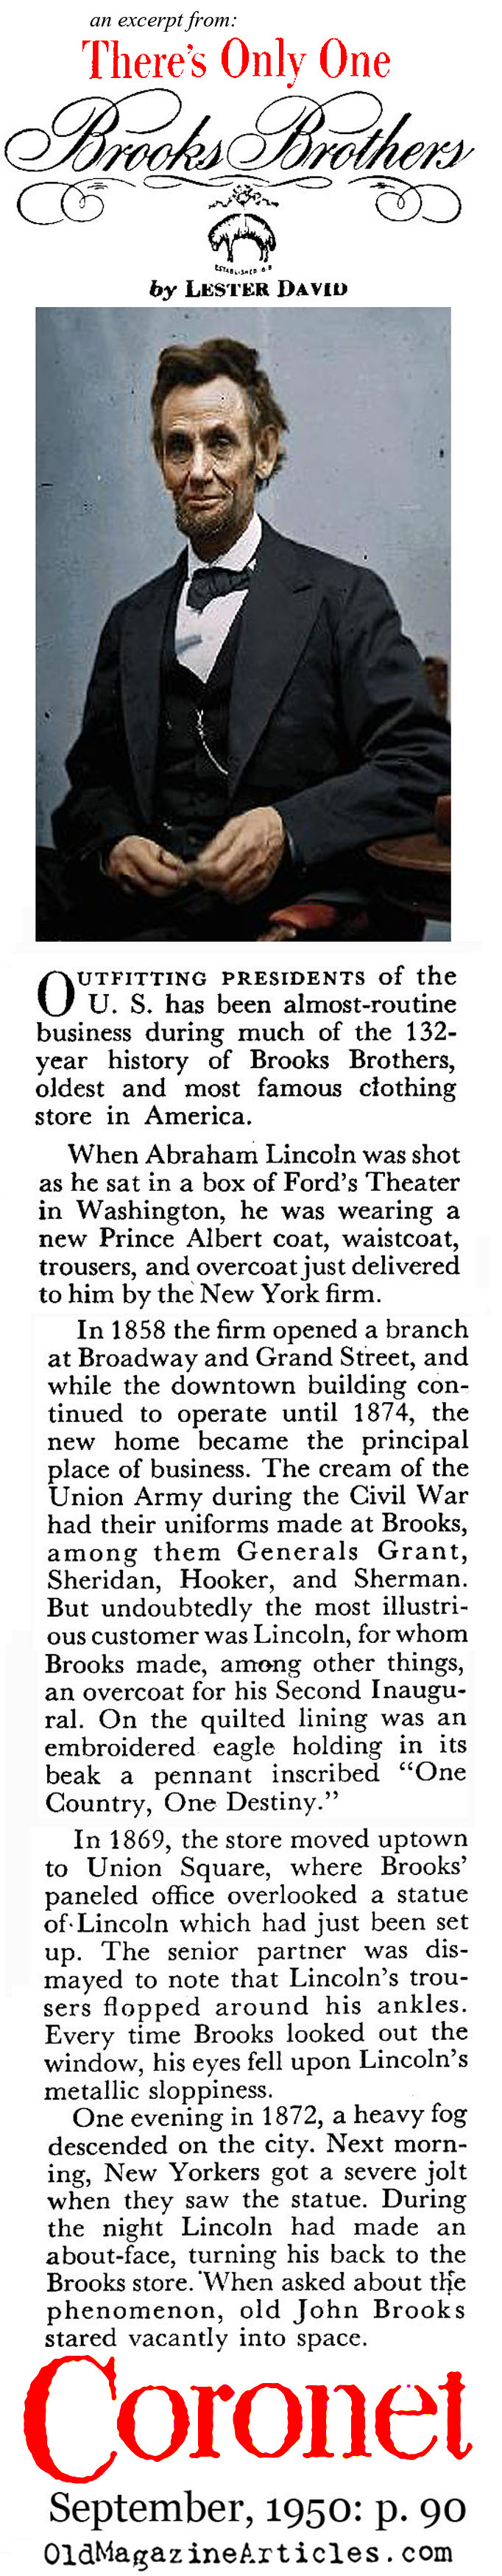 The Clothing of Abraham Lincoln (Coronet Magazine, 1950)